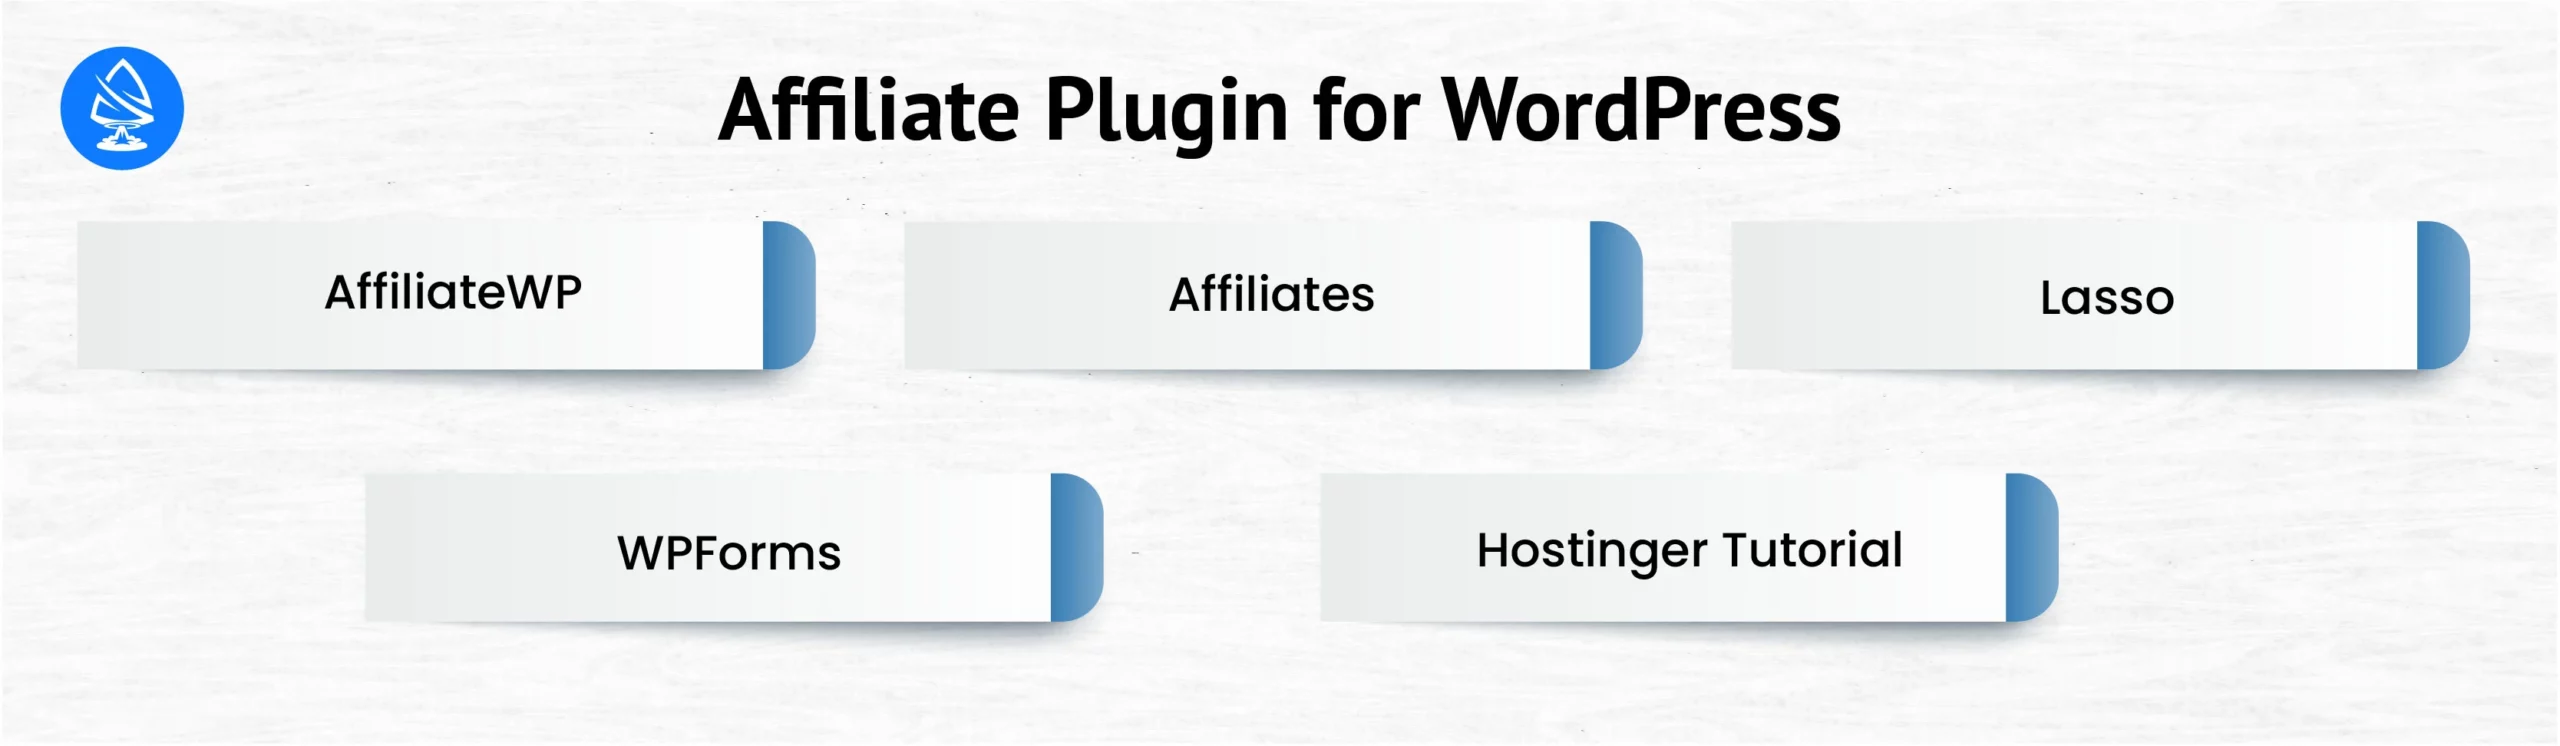 Affiliate Plugin for WordPress